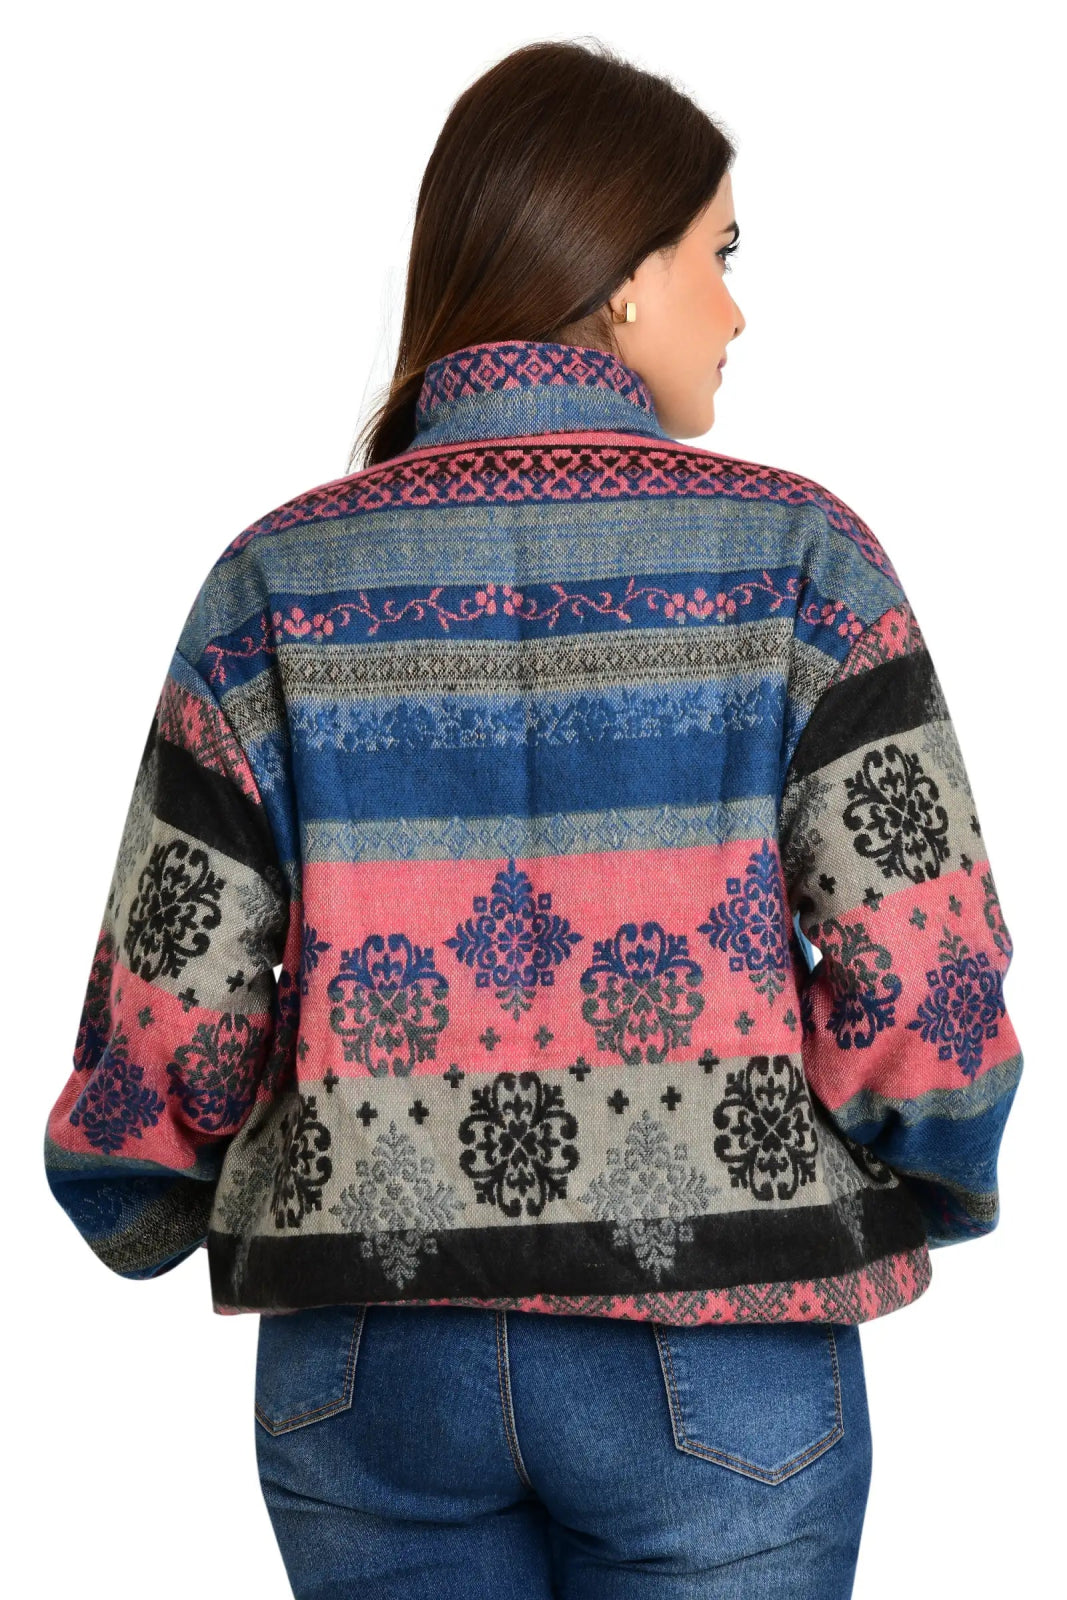 Yak Wool Blend Zipper Jacket Kimono | Autumn Winter Warm Cozy Diamond Aztec Geometric Soft comfy Bomber Bolero Style Sweater | With Pockets - The Eastern Loom